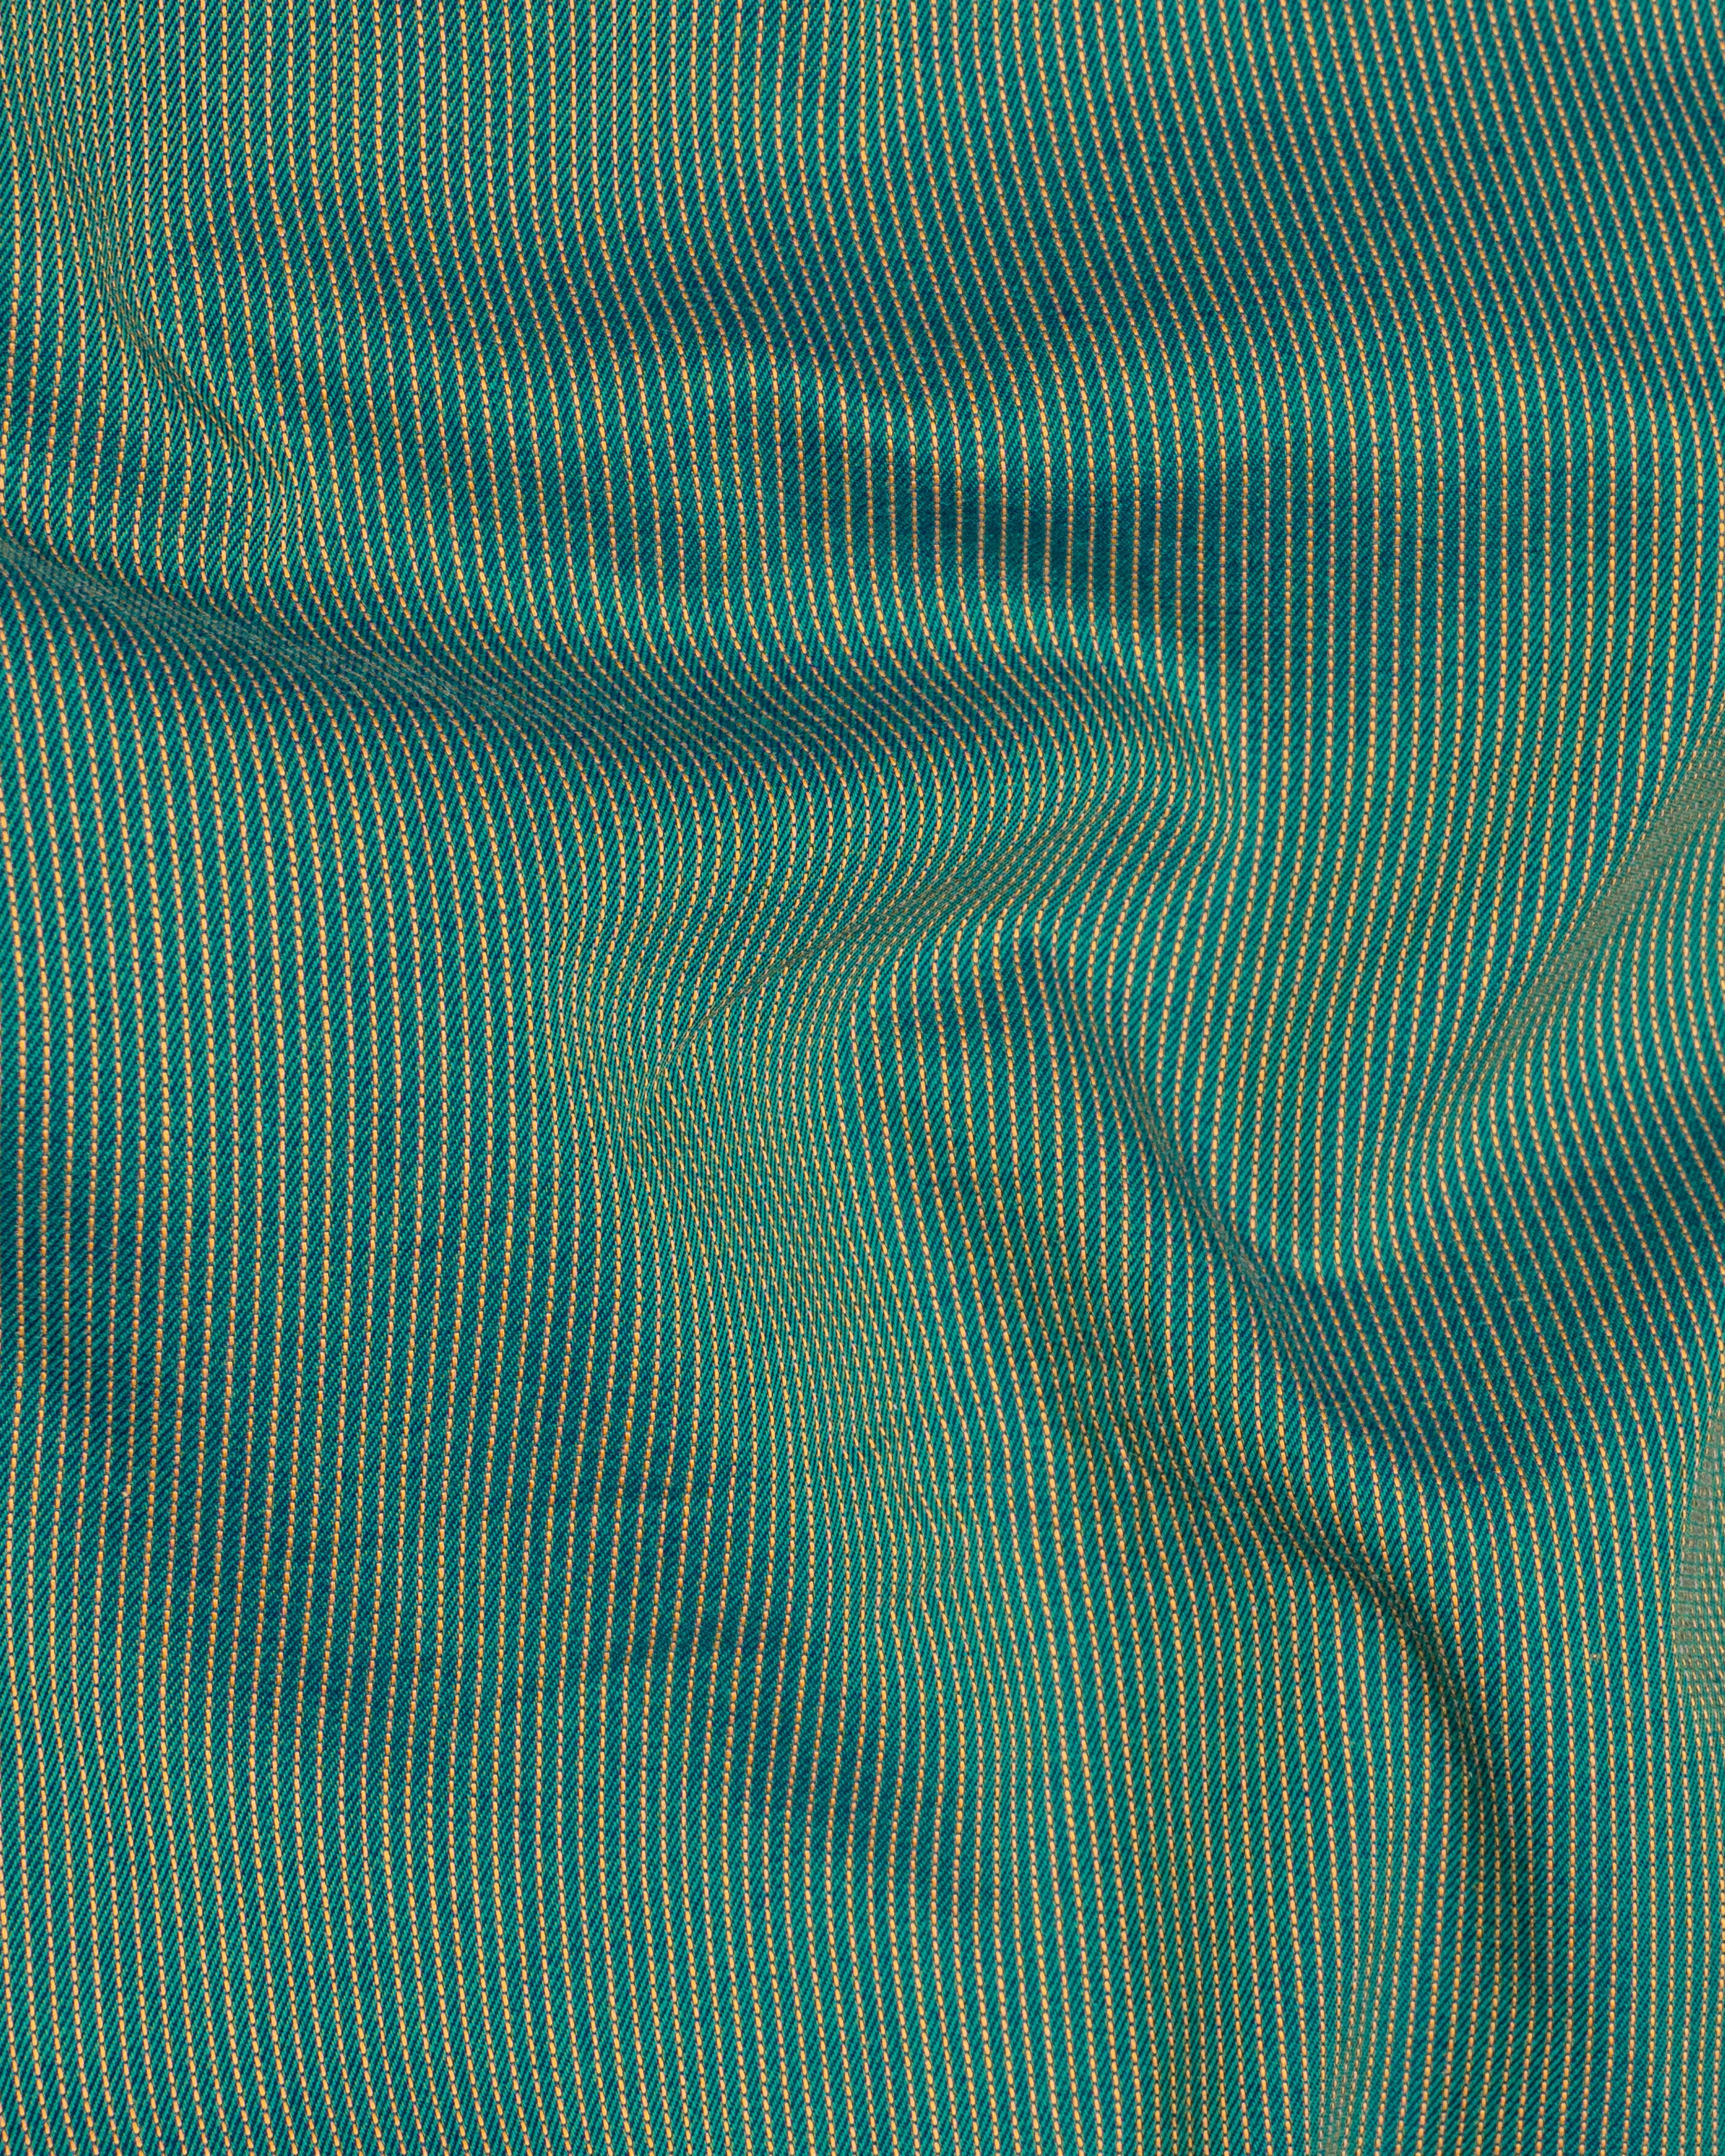 Aquamarine Green with Porche Yellow Two-Tone Jacquard Textured Premium Giza Cotton Shirt 9517-M-38, 9517-M-H-38, 9517-M-39, 9517-M-H-39, 9517-M-40, 9517-M-H-40, 9517-M-42, 9517-M-H-42, 9517-M-44, 9517-M-H-44, 9517-M-46, 9517-M-H-46, 9517-M-48, 9517-M-H-48, 9517-M-50, 9517-M-H-50, 9517-M-52, 9517-M-H-52